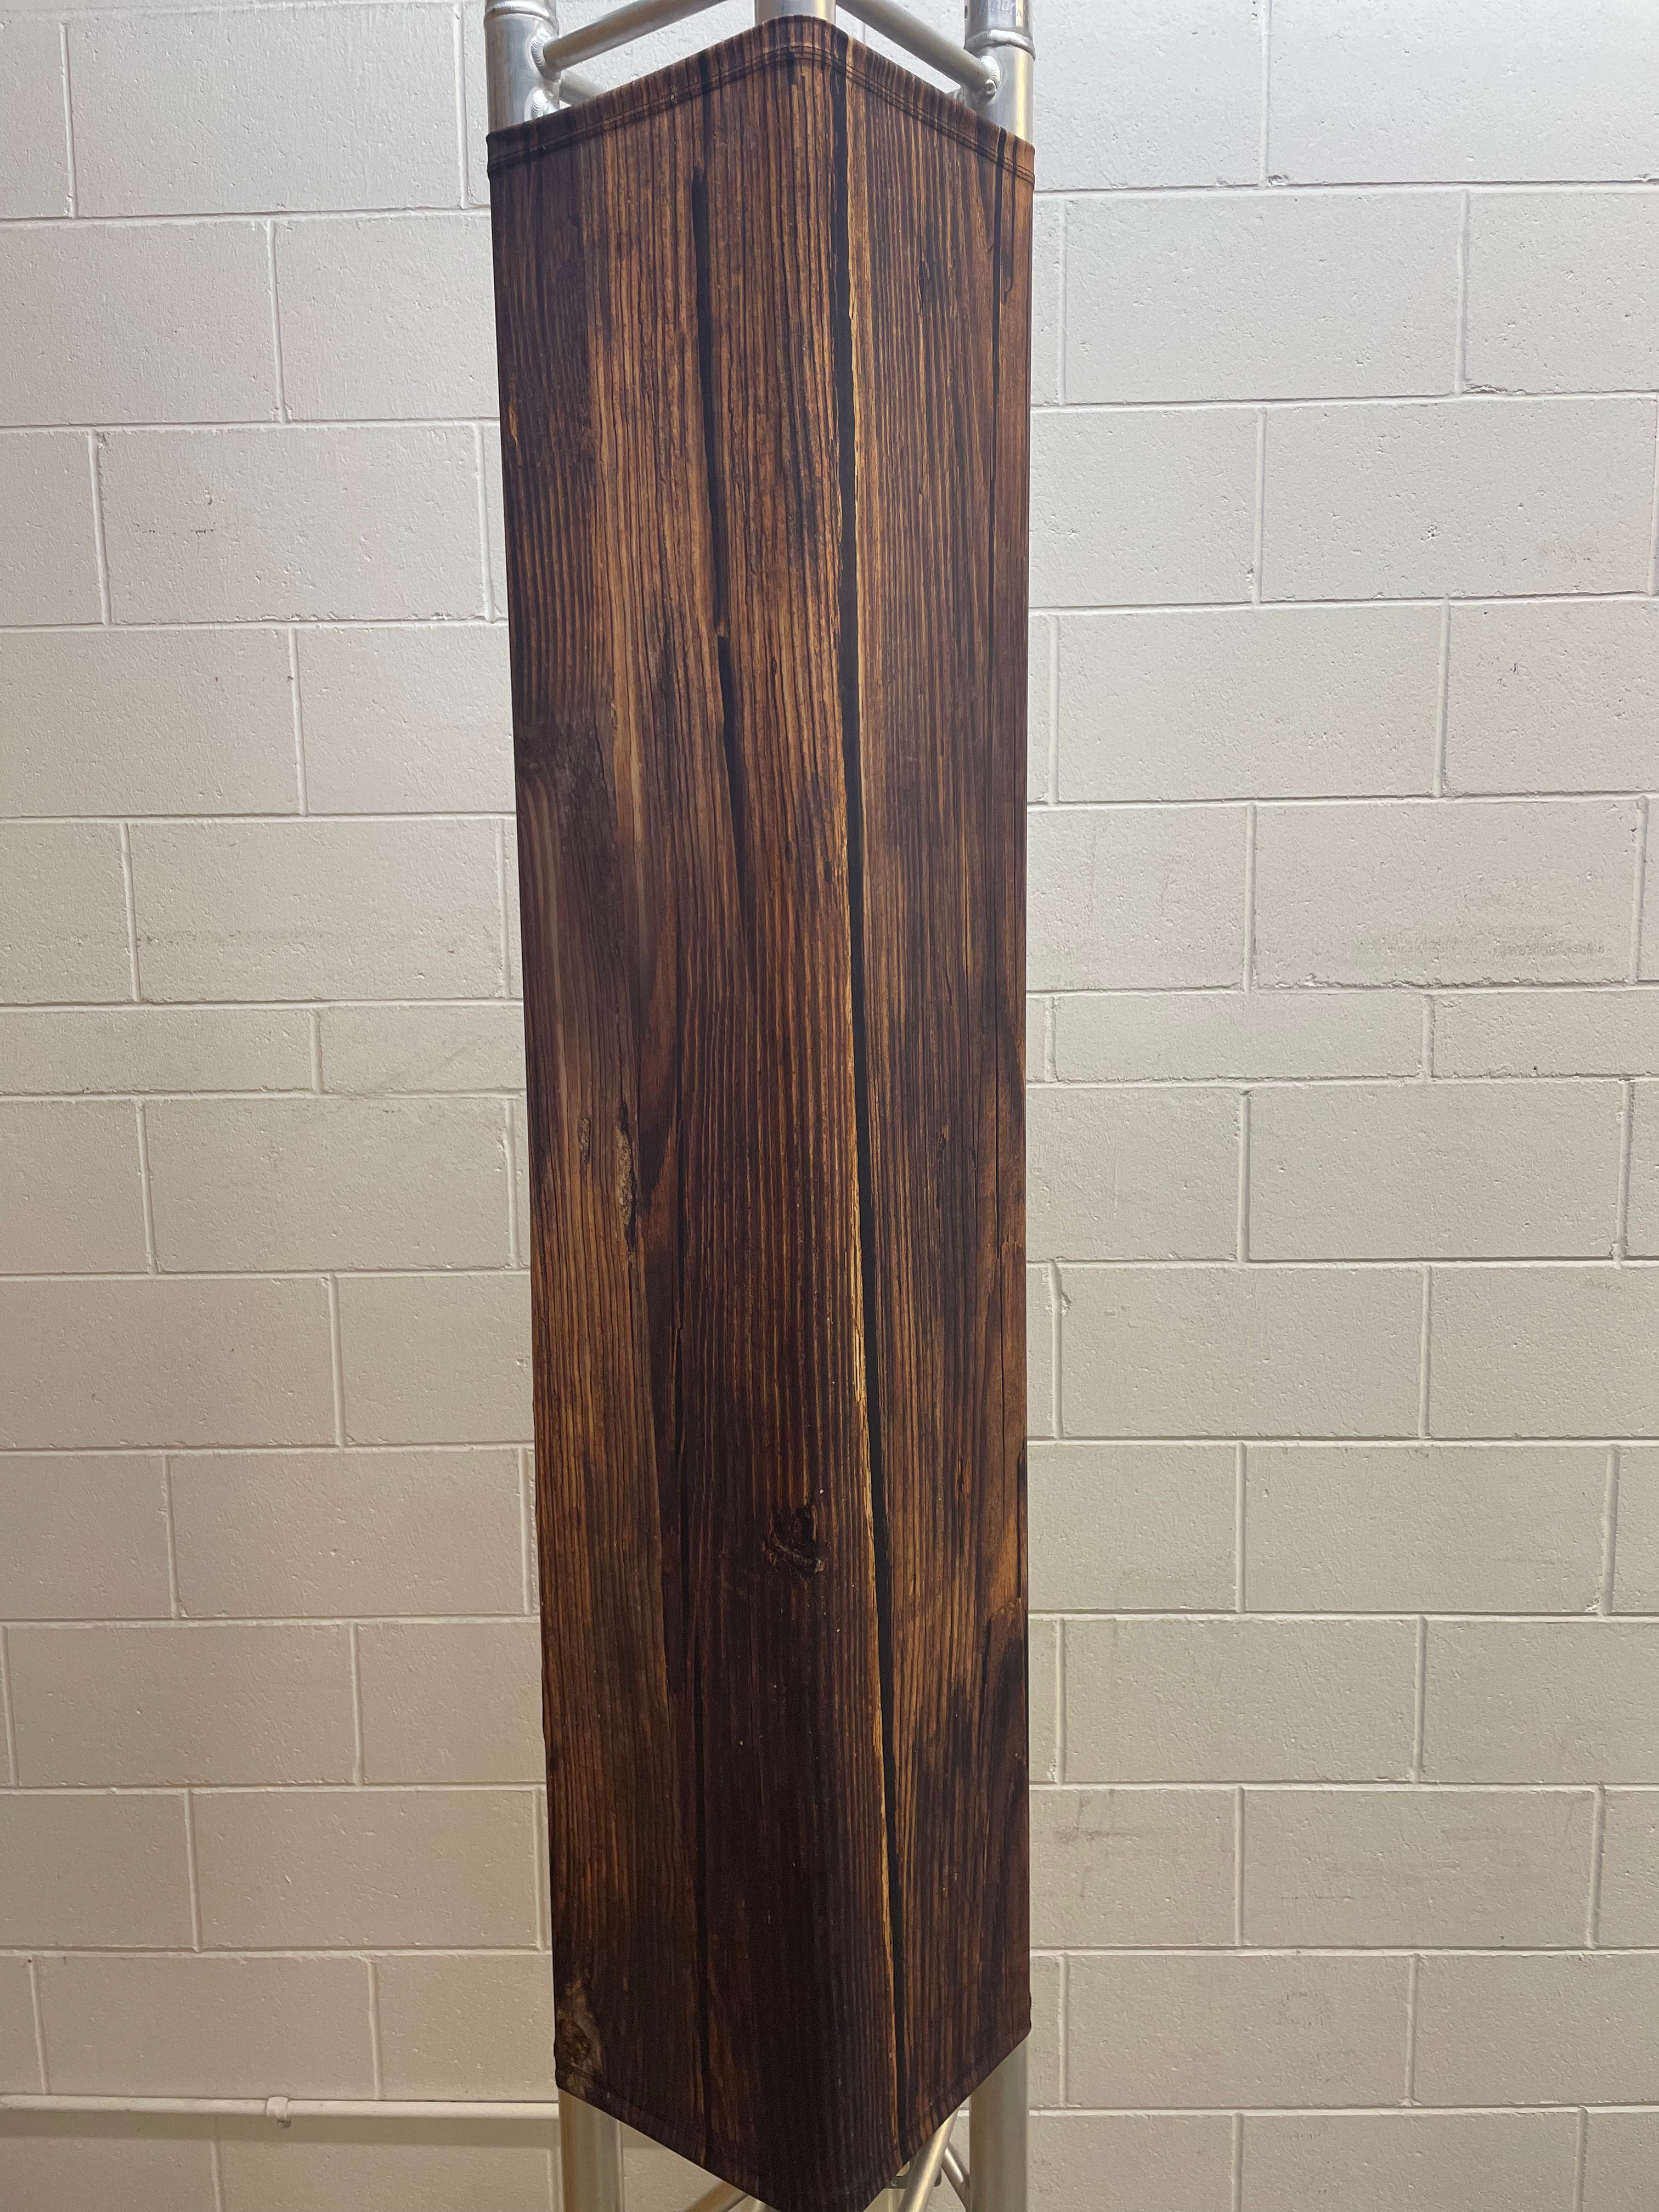 Wood Plank Printed Truss Covers - 12"x12" Box Truss